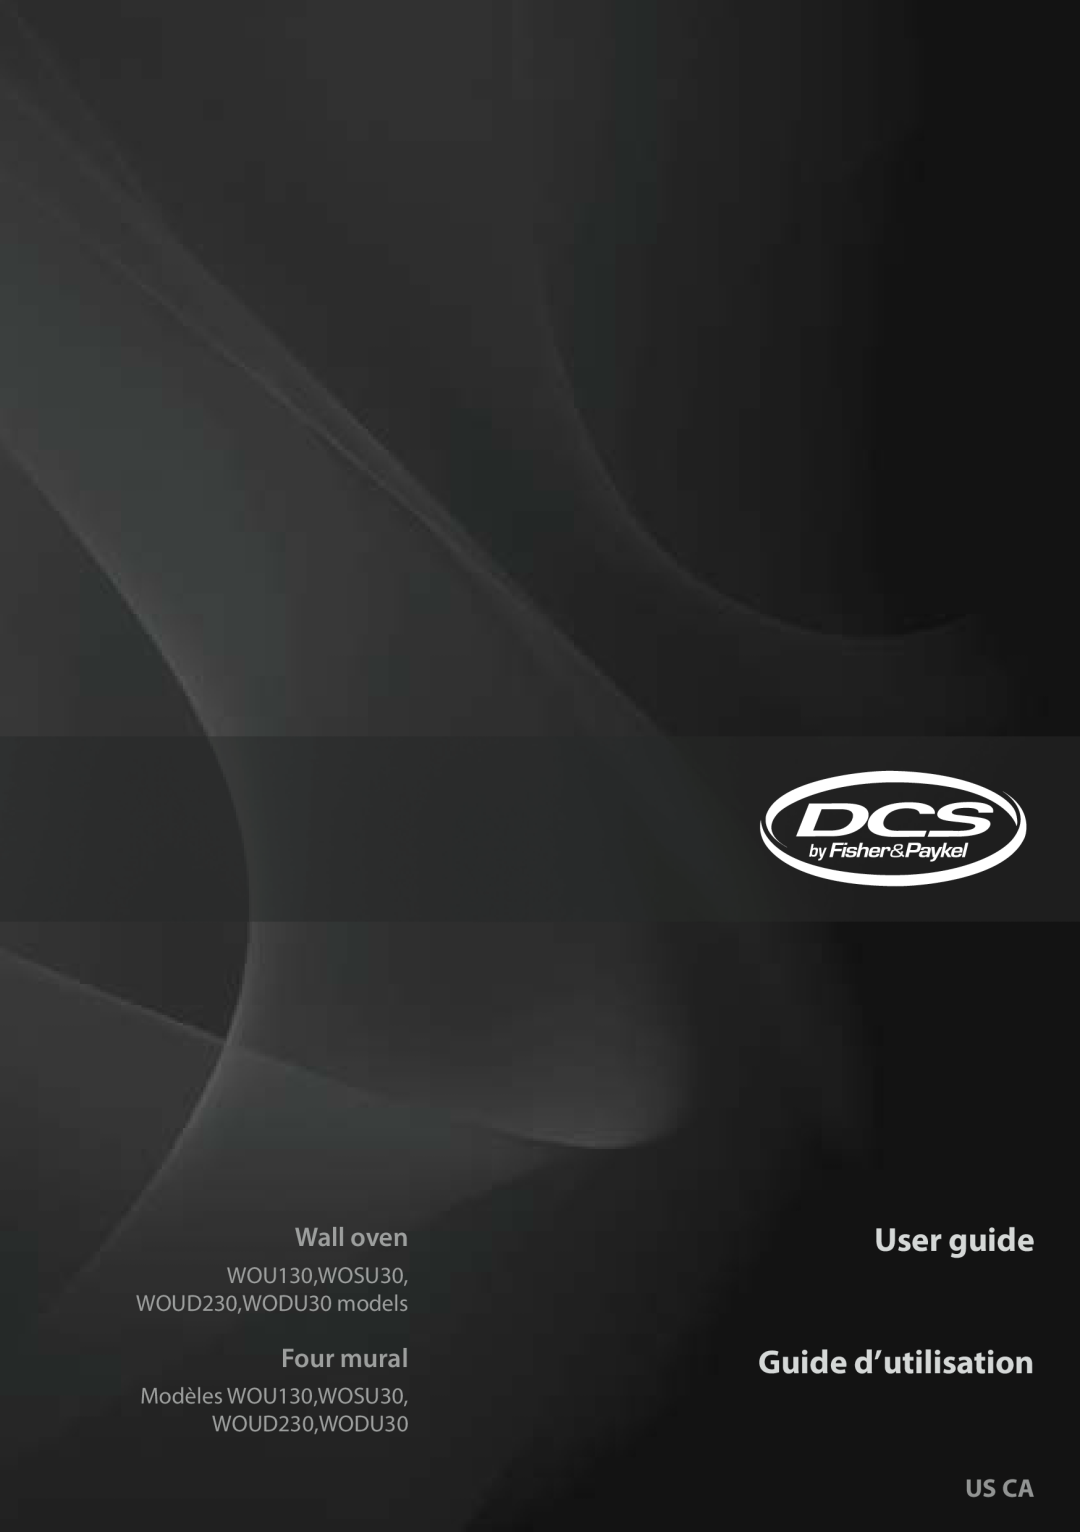 DCS manual User guide Guide d’utilisation, Wall oven, Four mural, Us Ca, WOU130,WOSU30, WOUD230,WODU30 models 